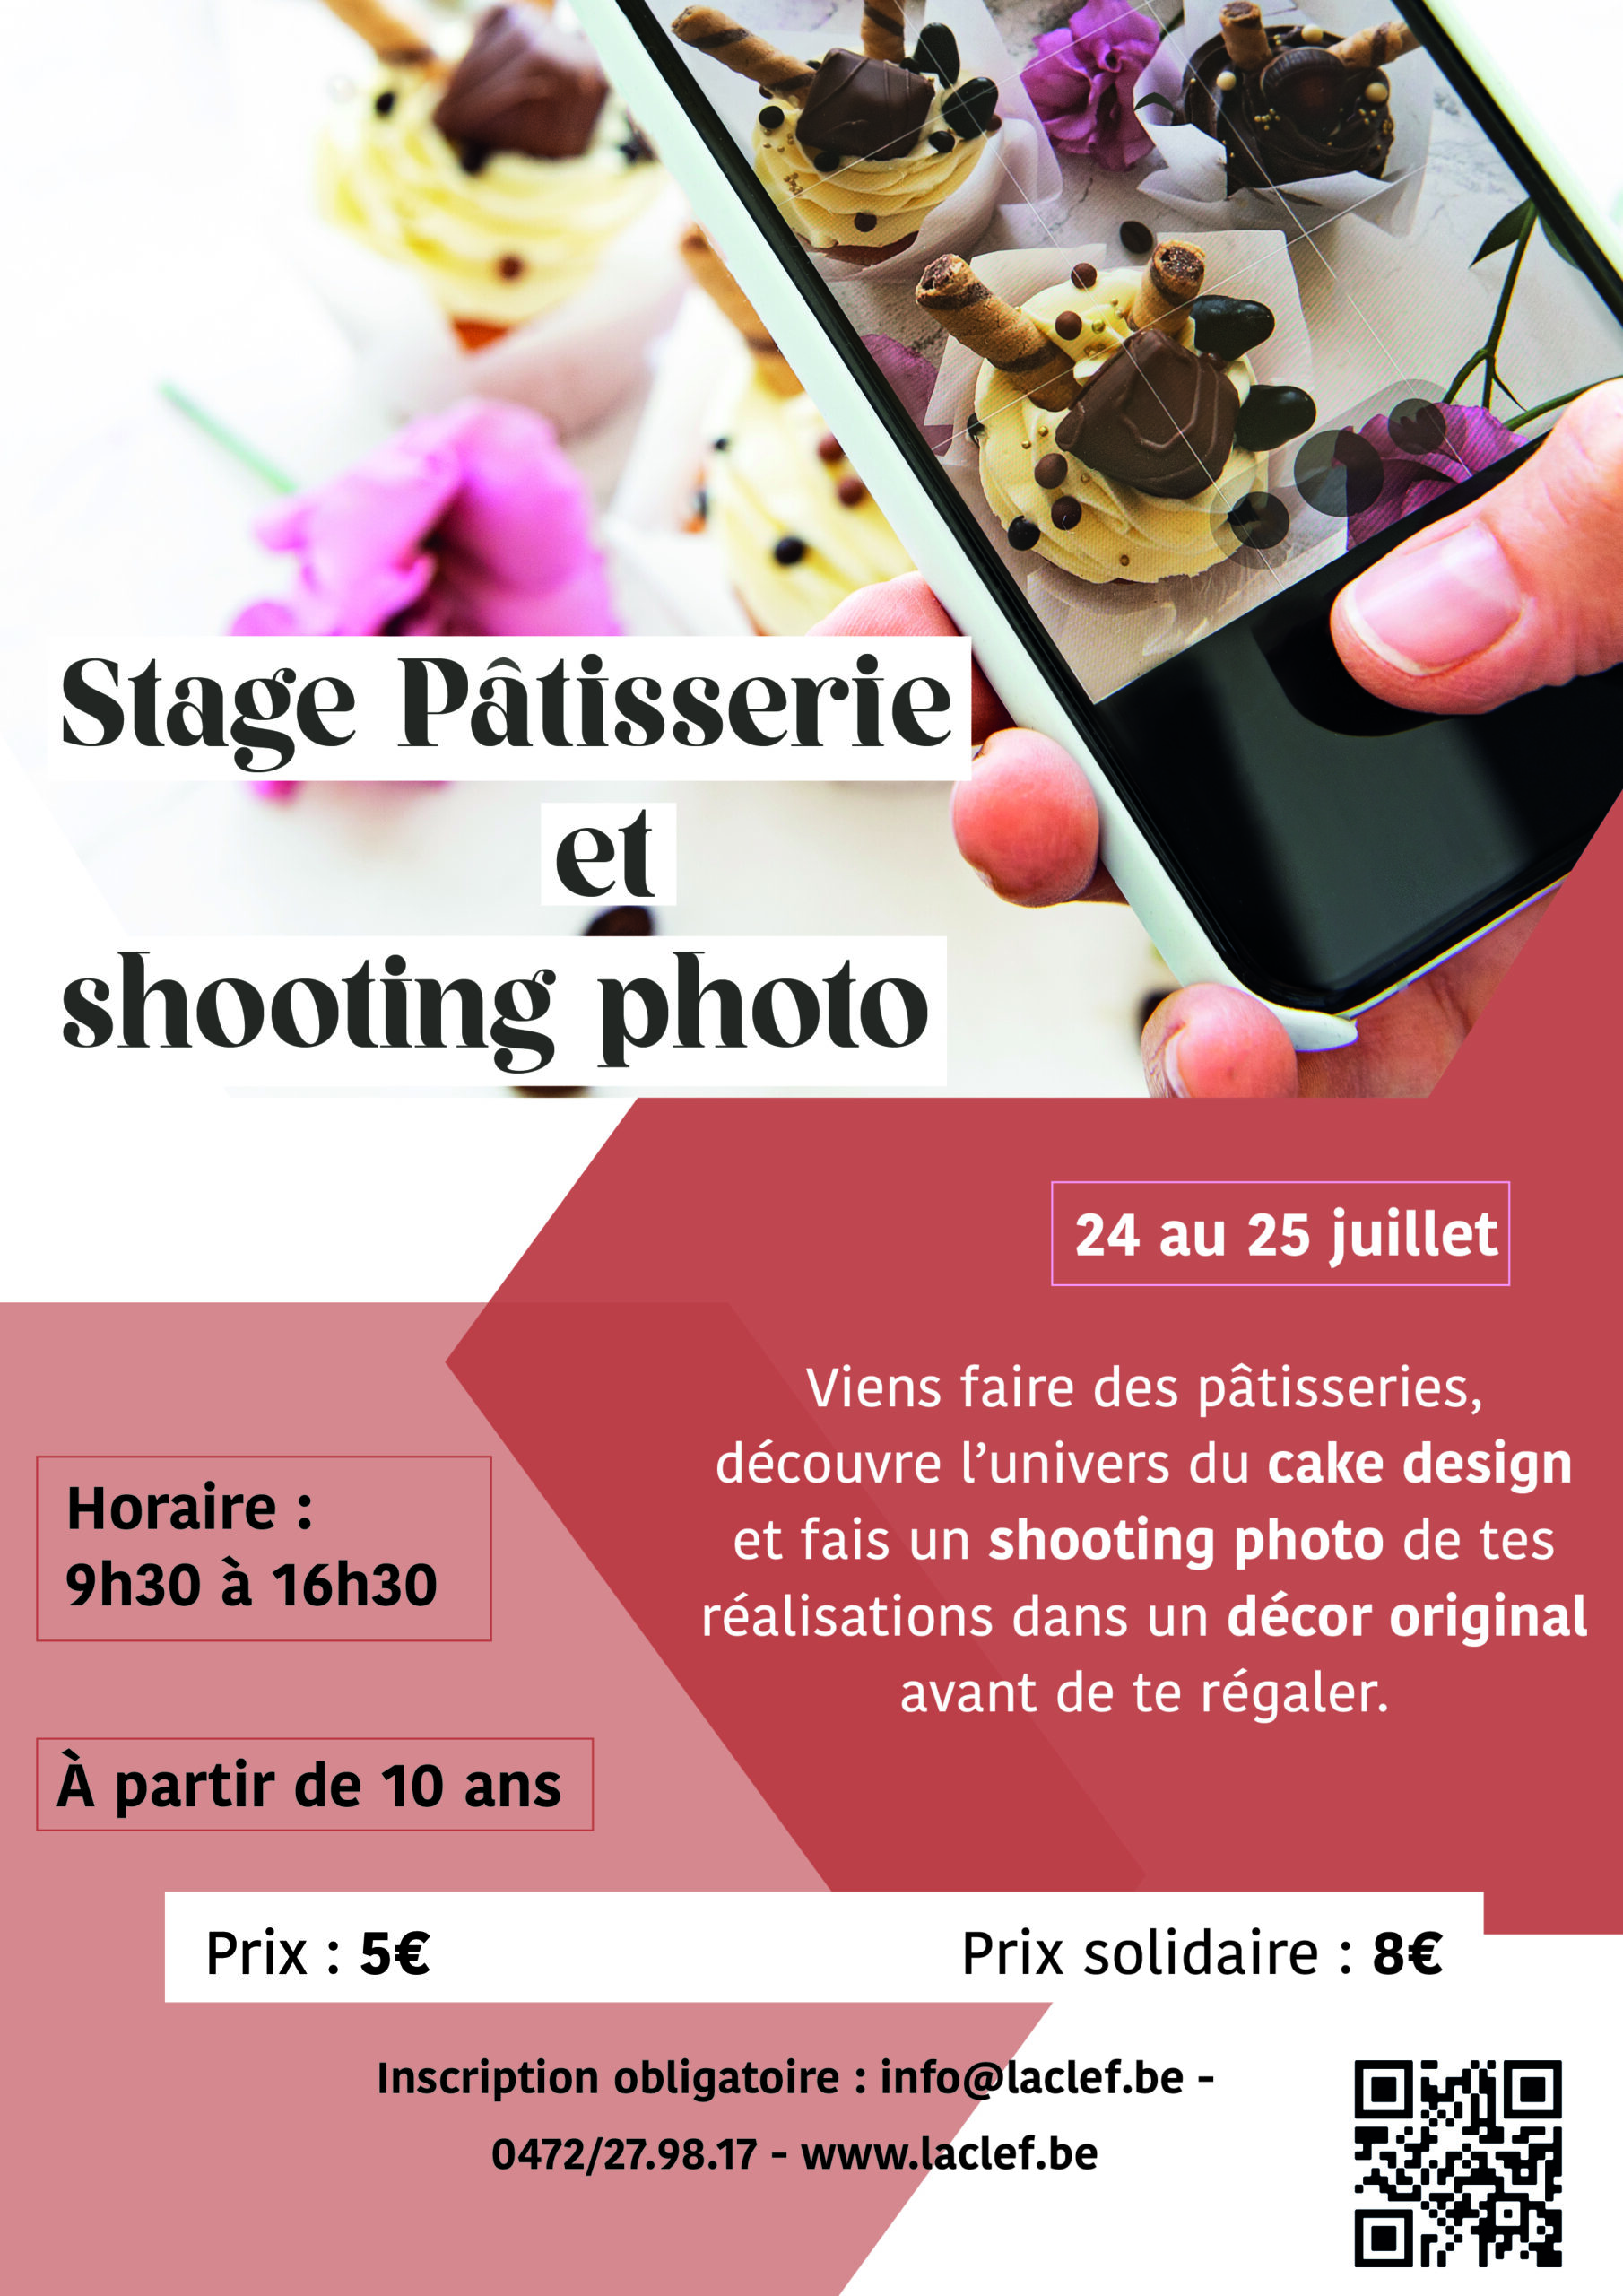 Stage Pâtisserie et shooting photo